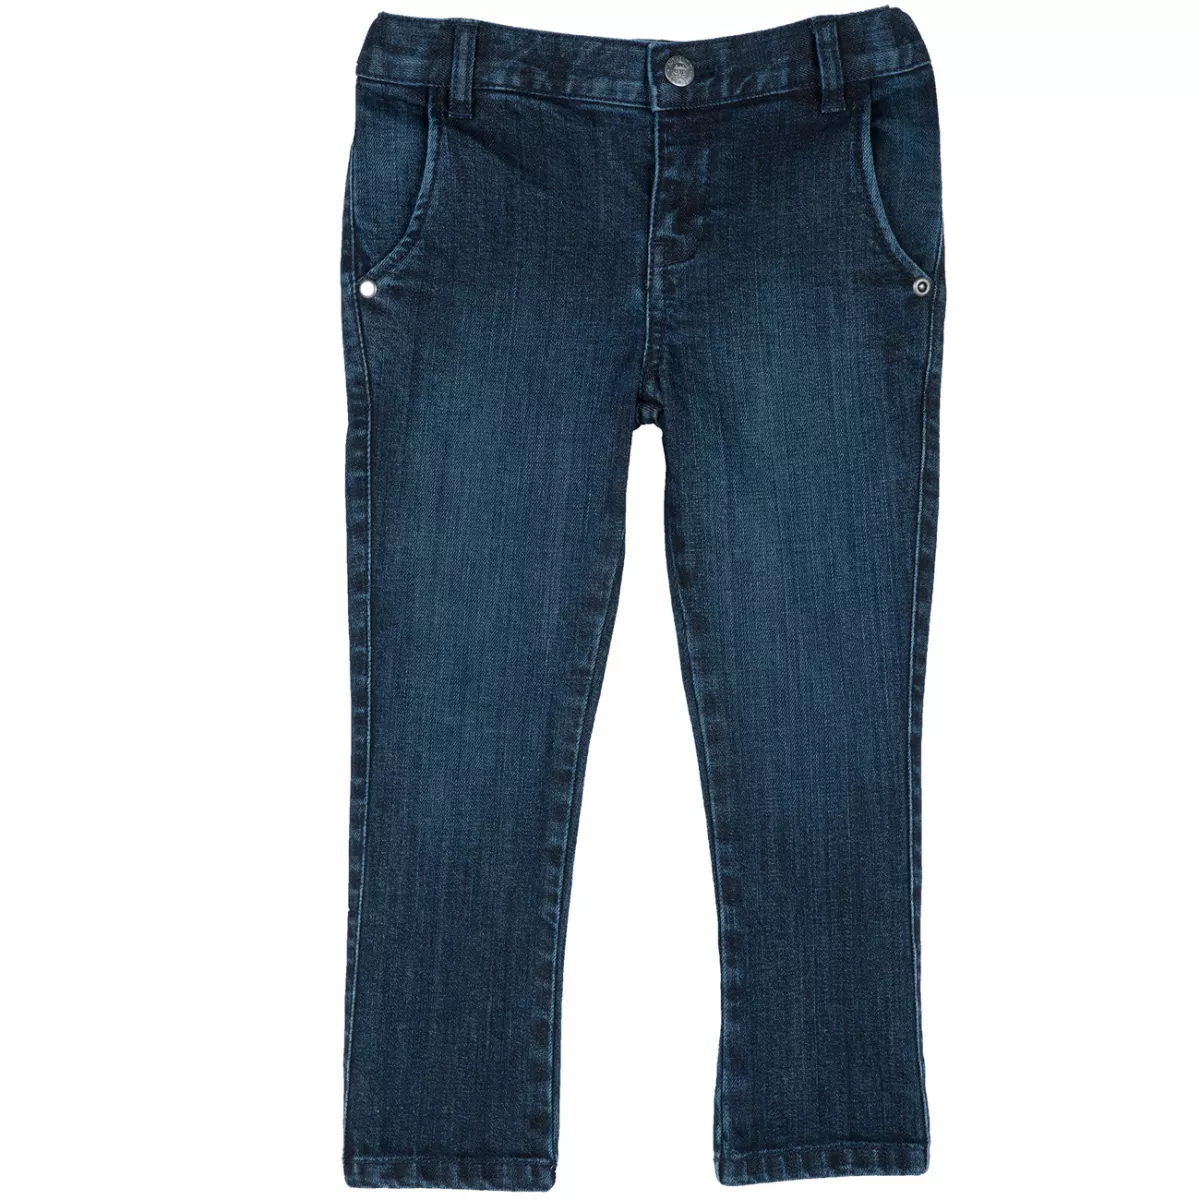 Pantaloni jeans copii Chicco, albastru inchis, 104